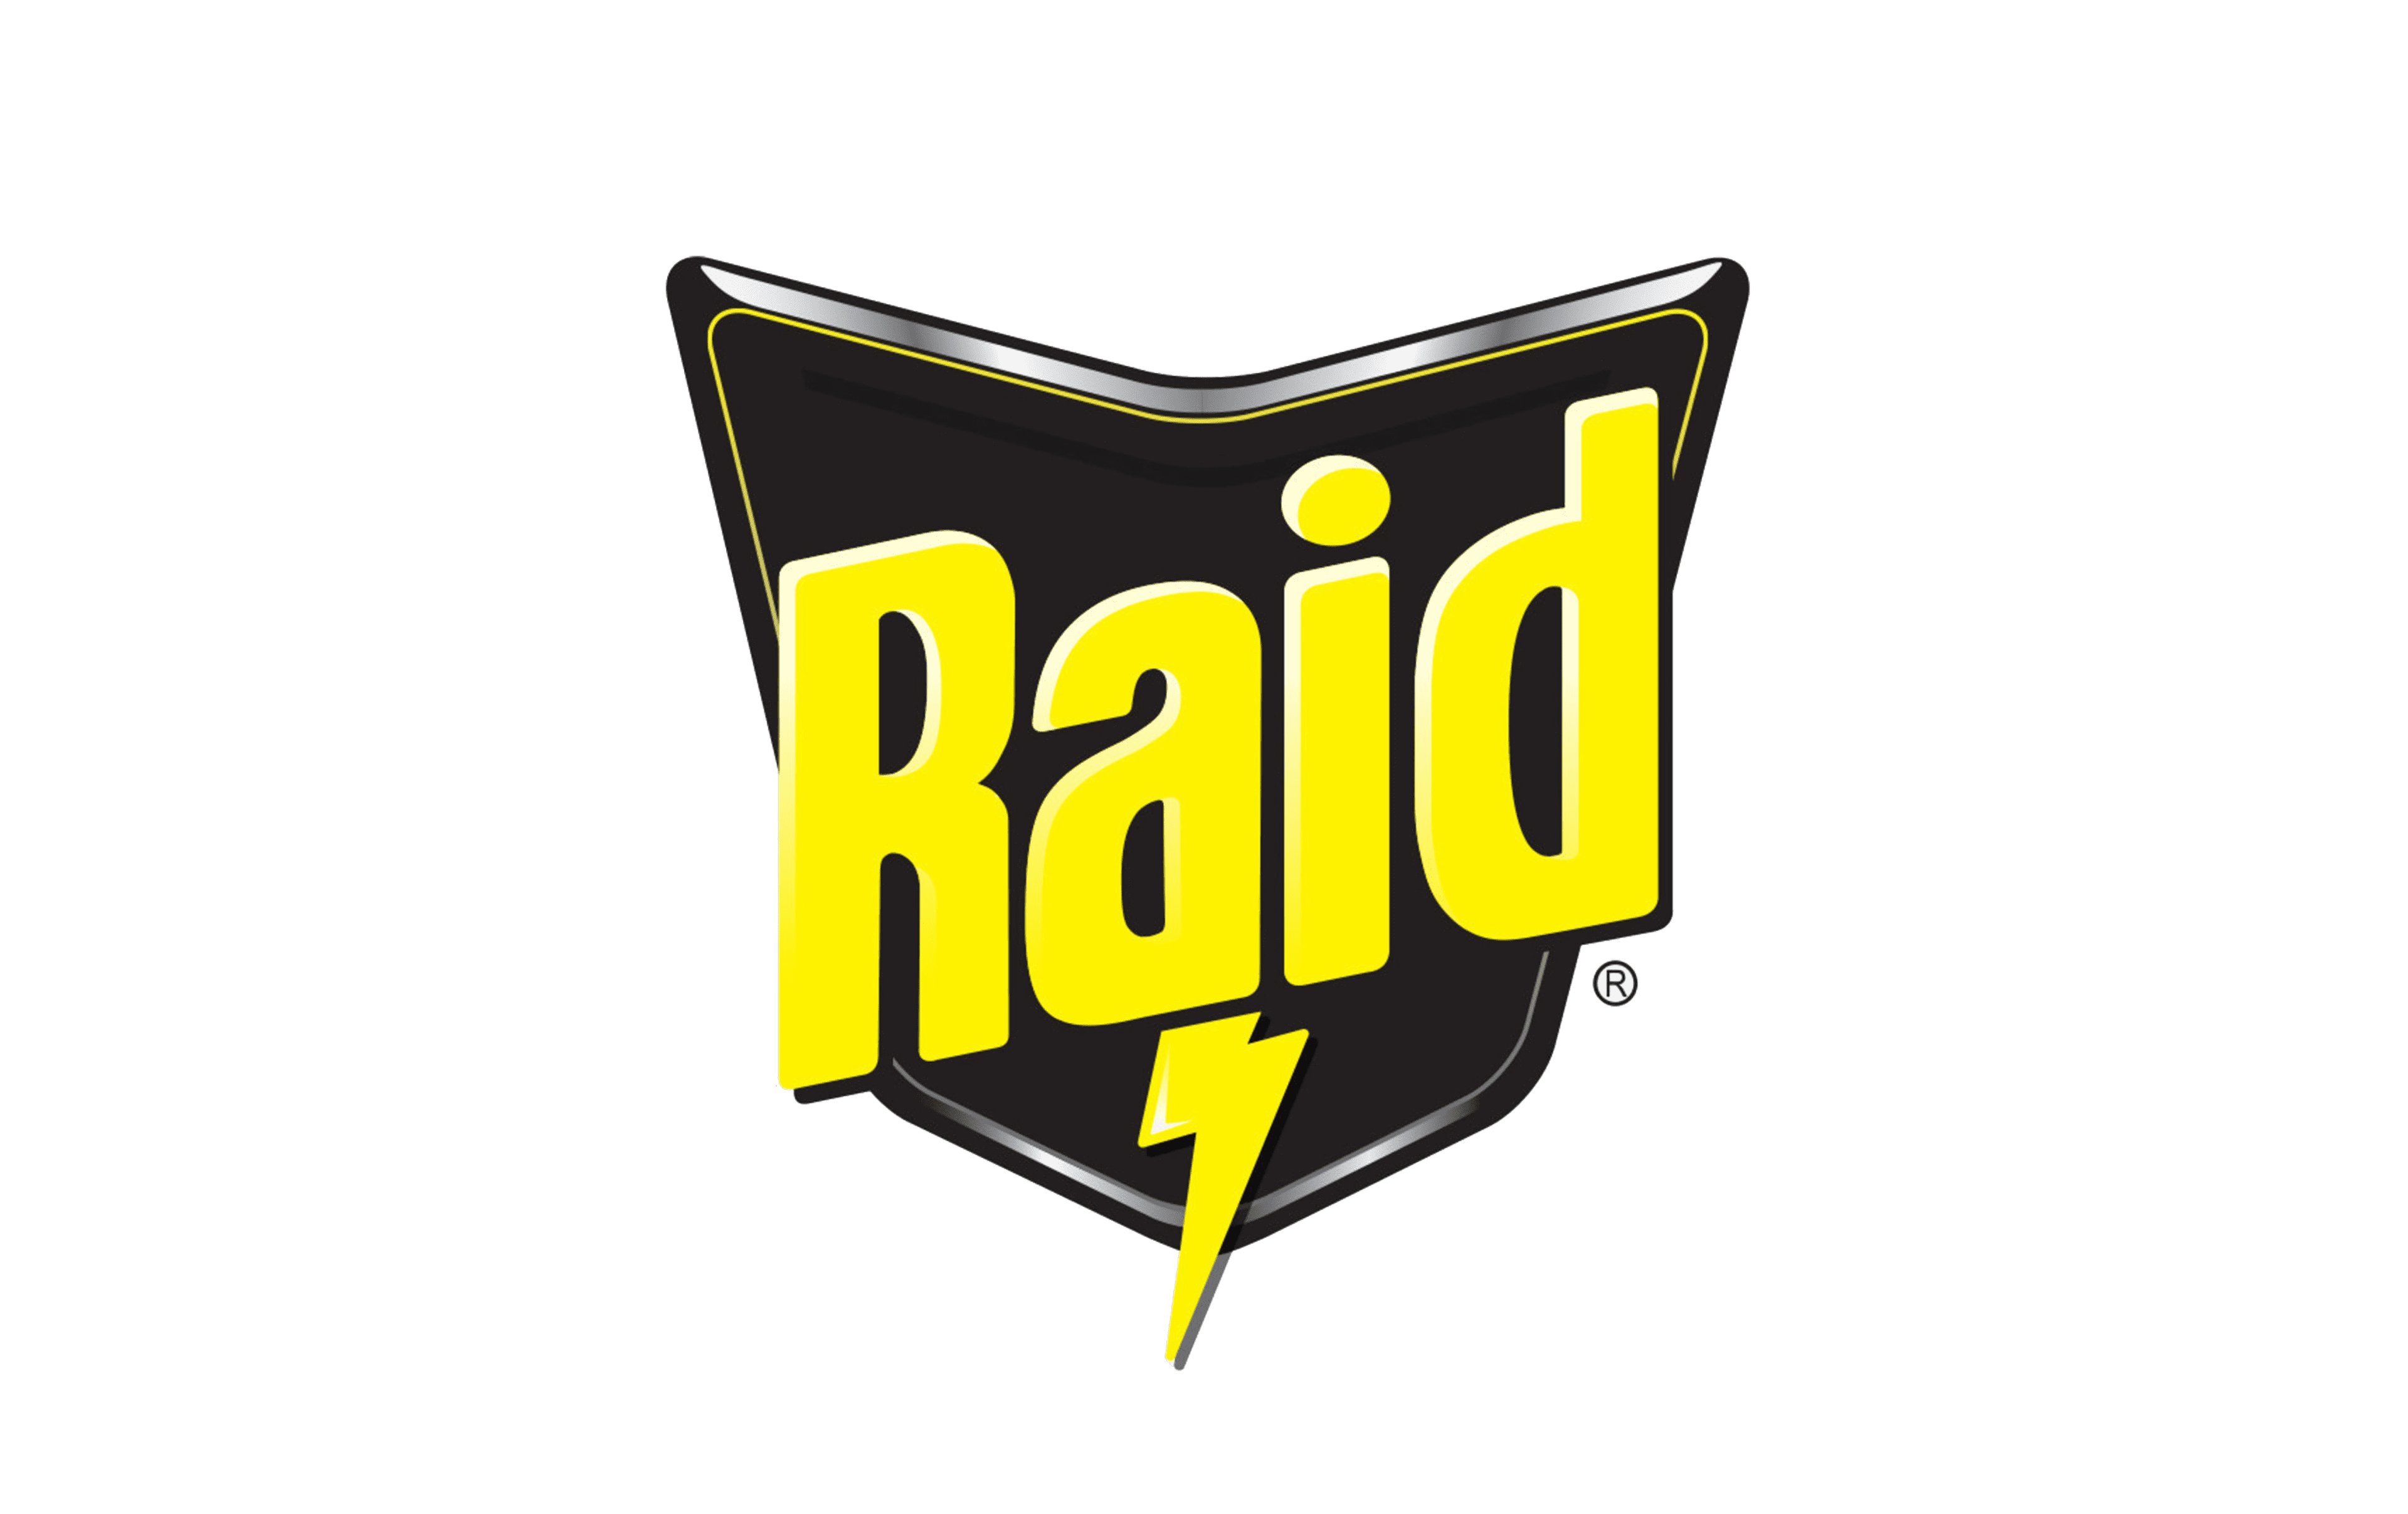 Raid Logo and symbol, meaning, history, PNG